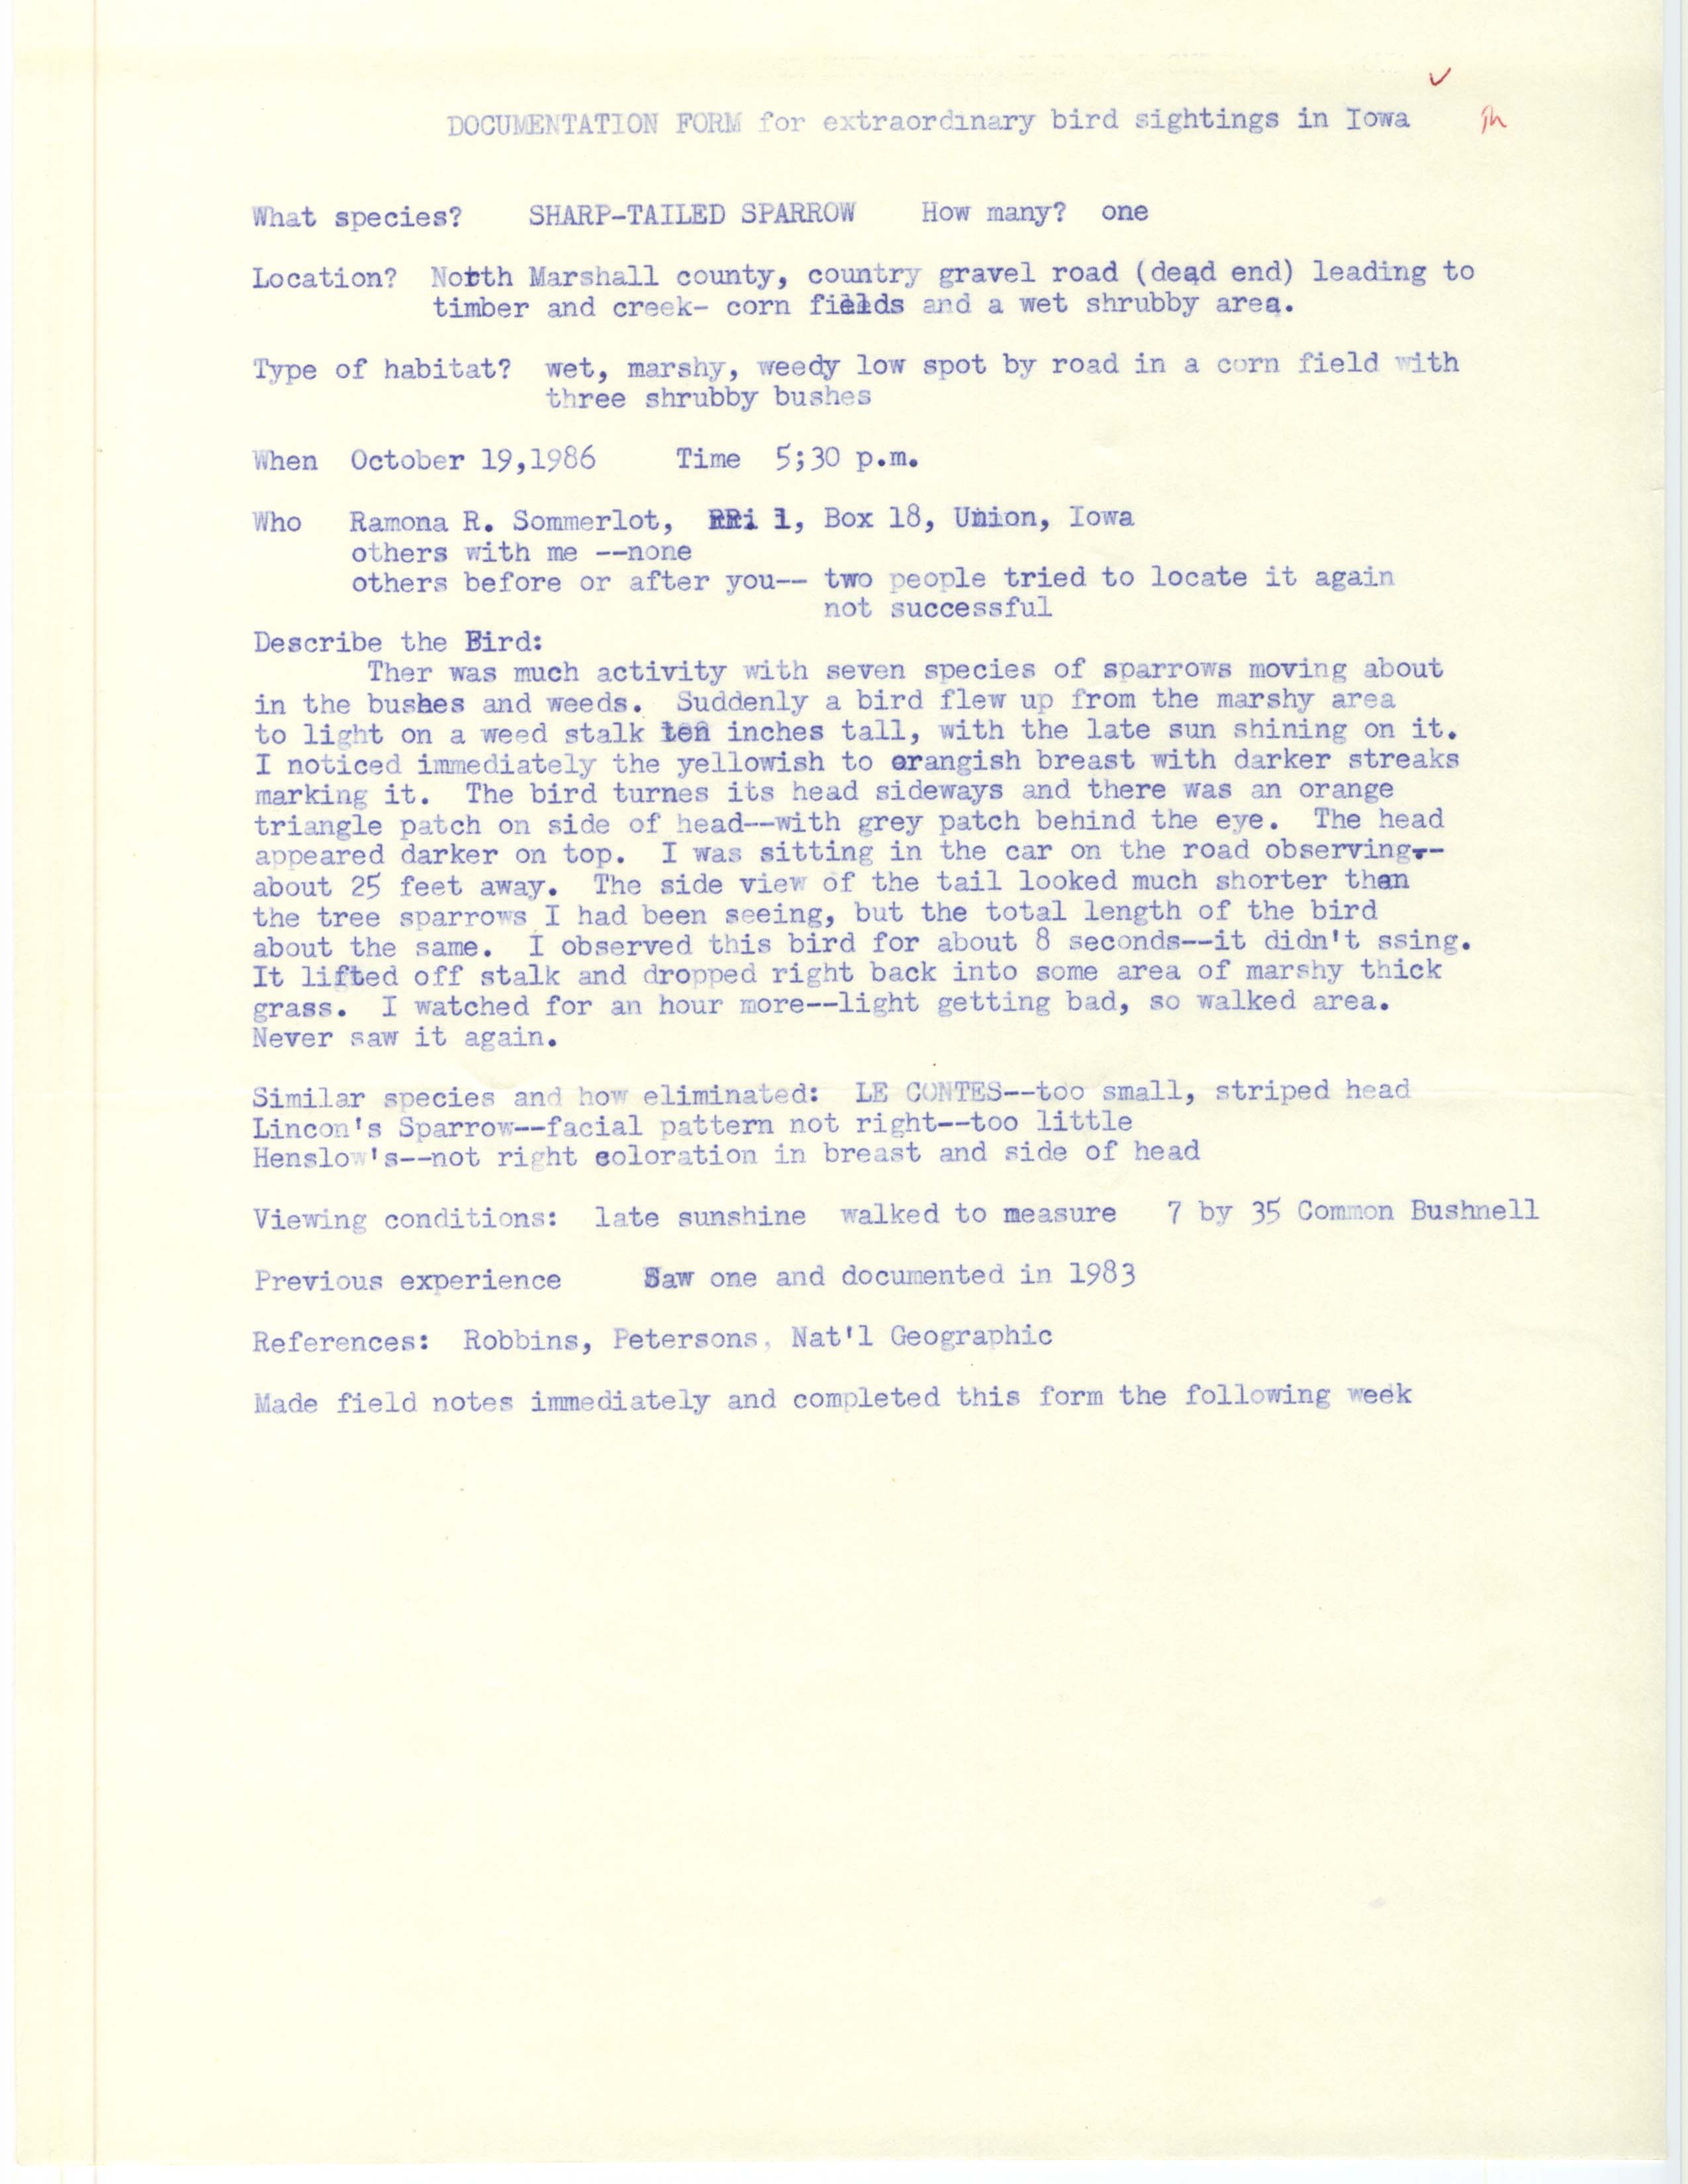 Rare bird documentation form for Sharp-tailed Sparrow at North Marshall County, 1986